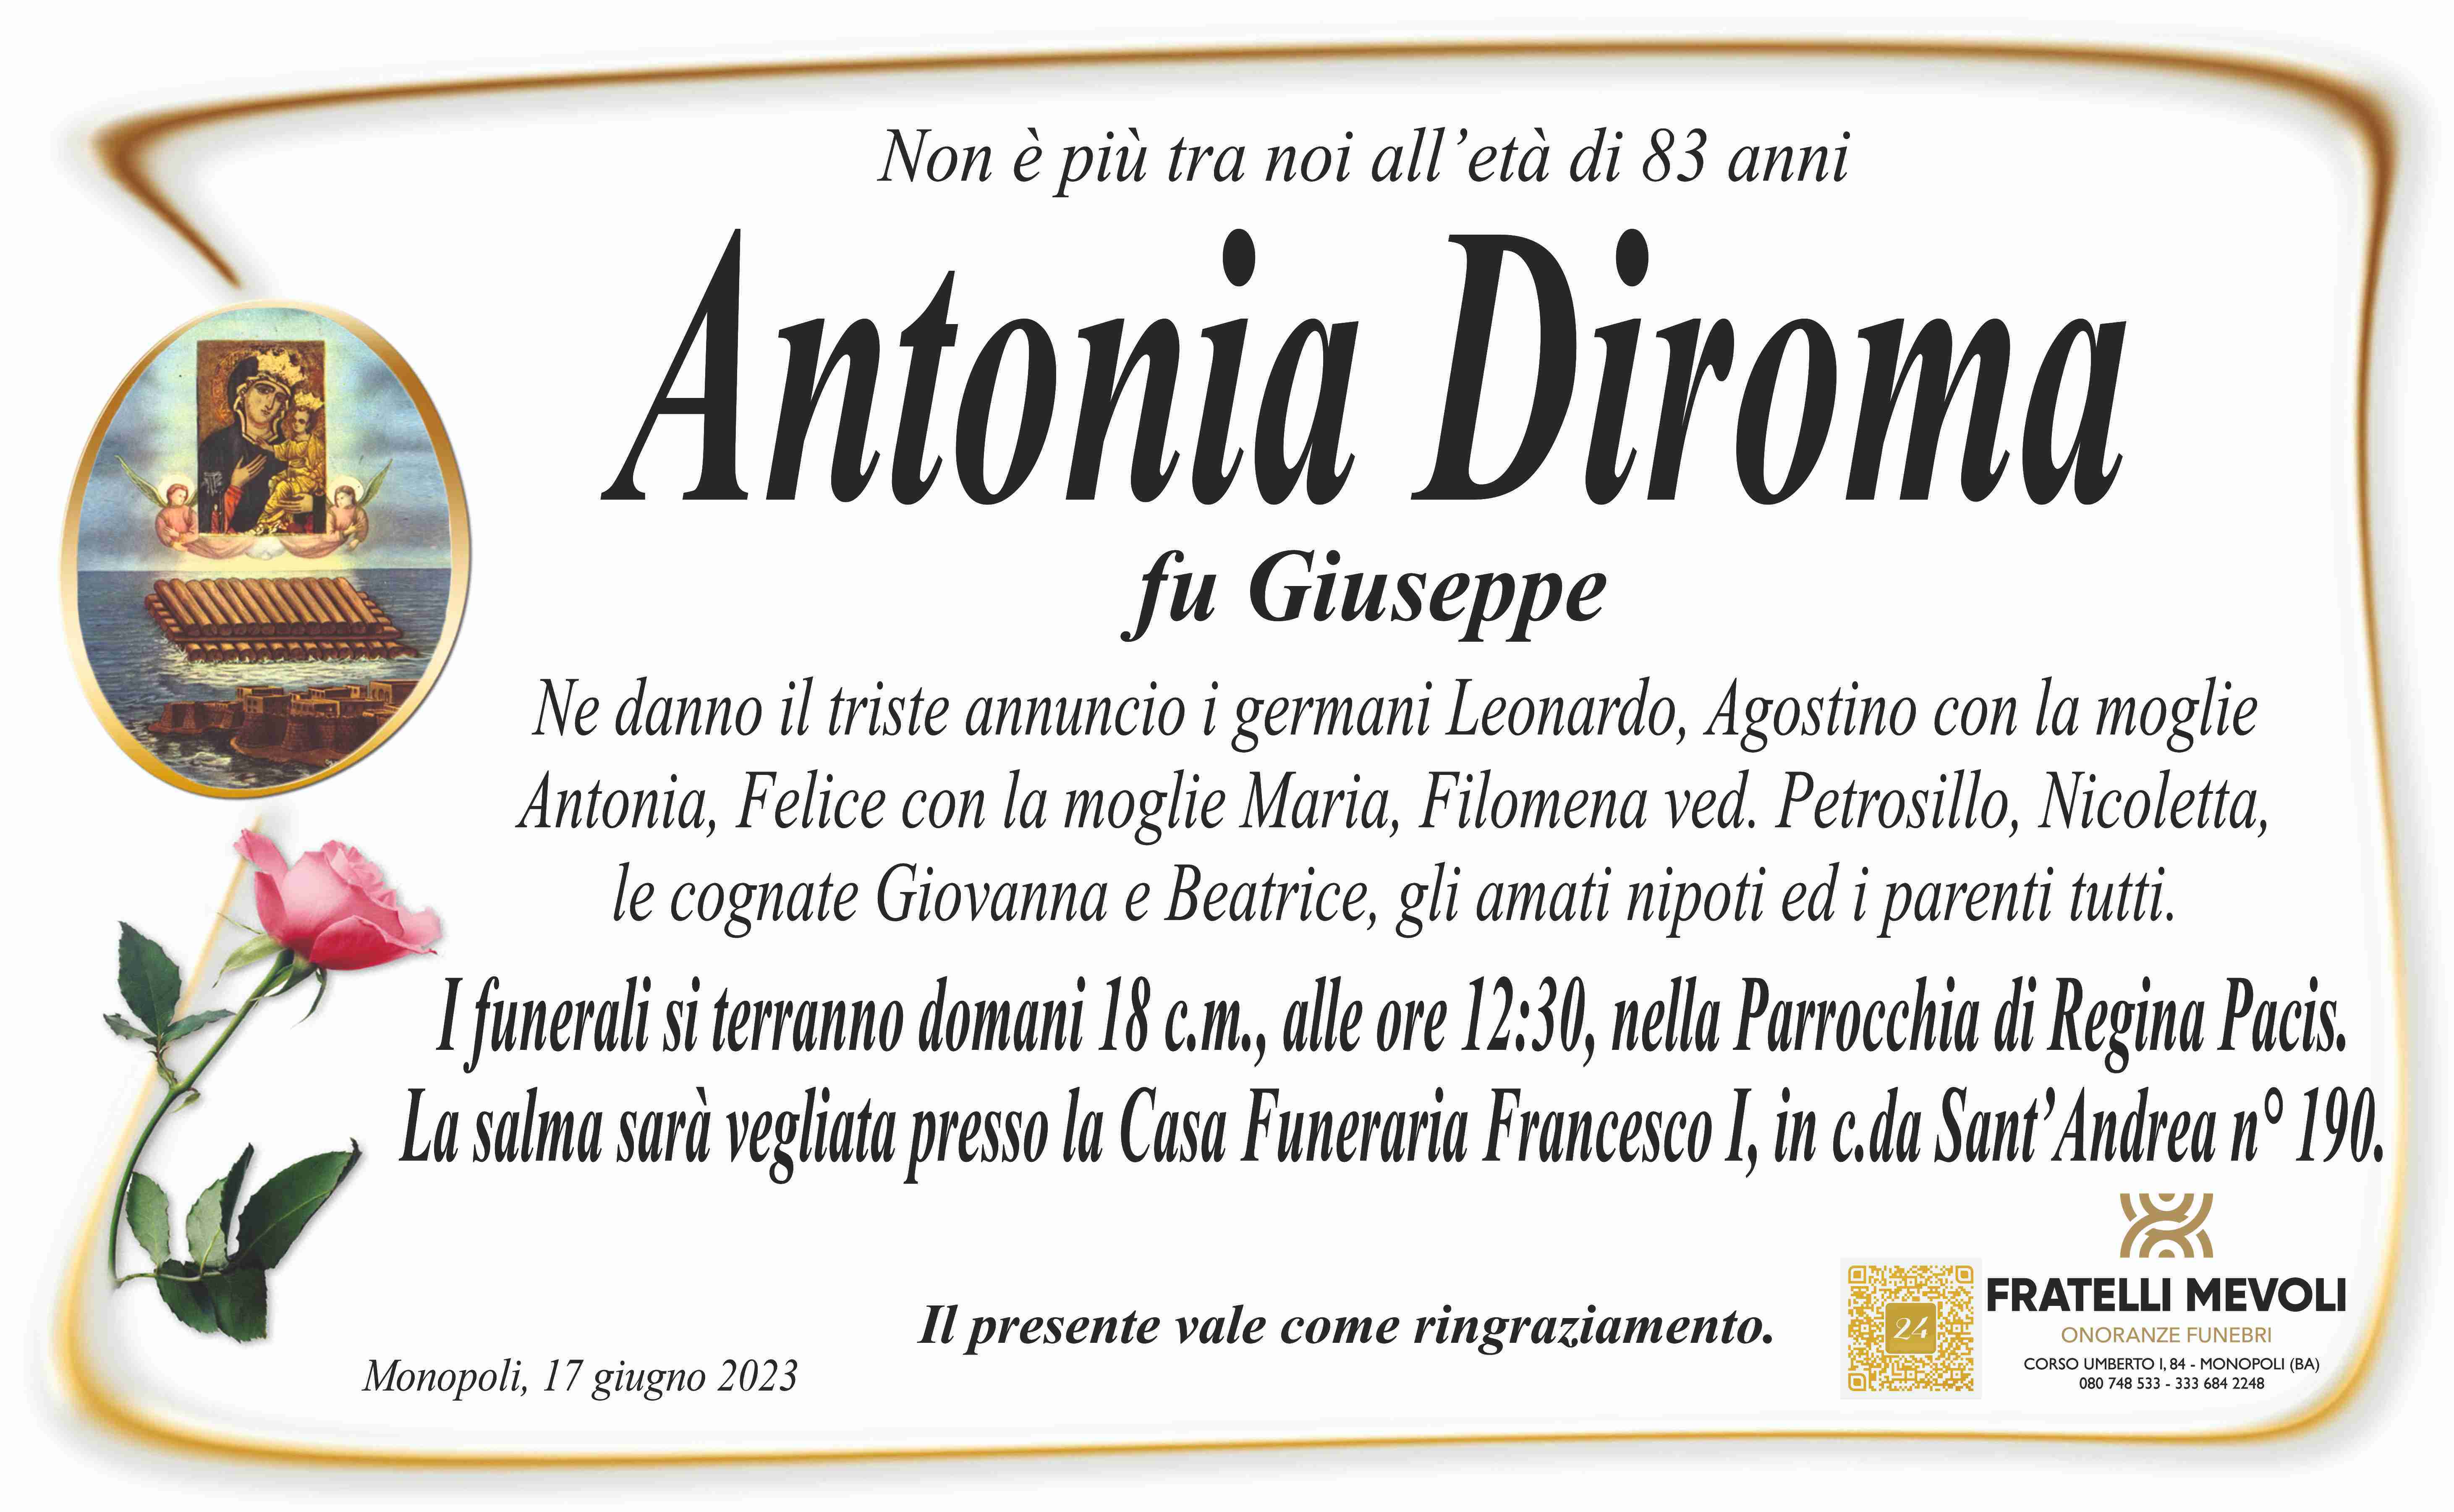 Antonia Diroma